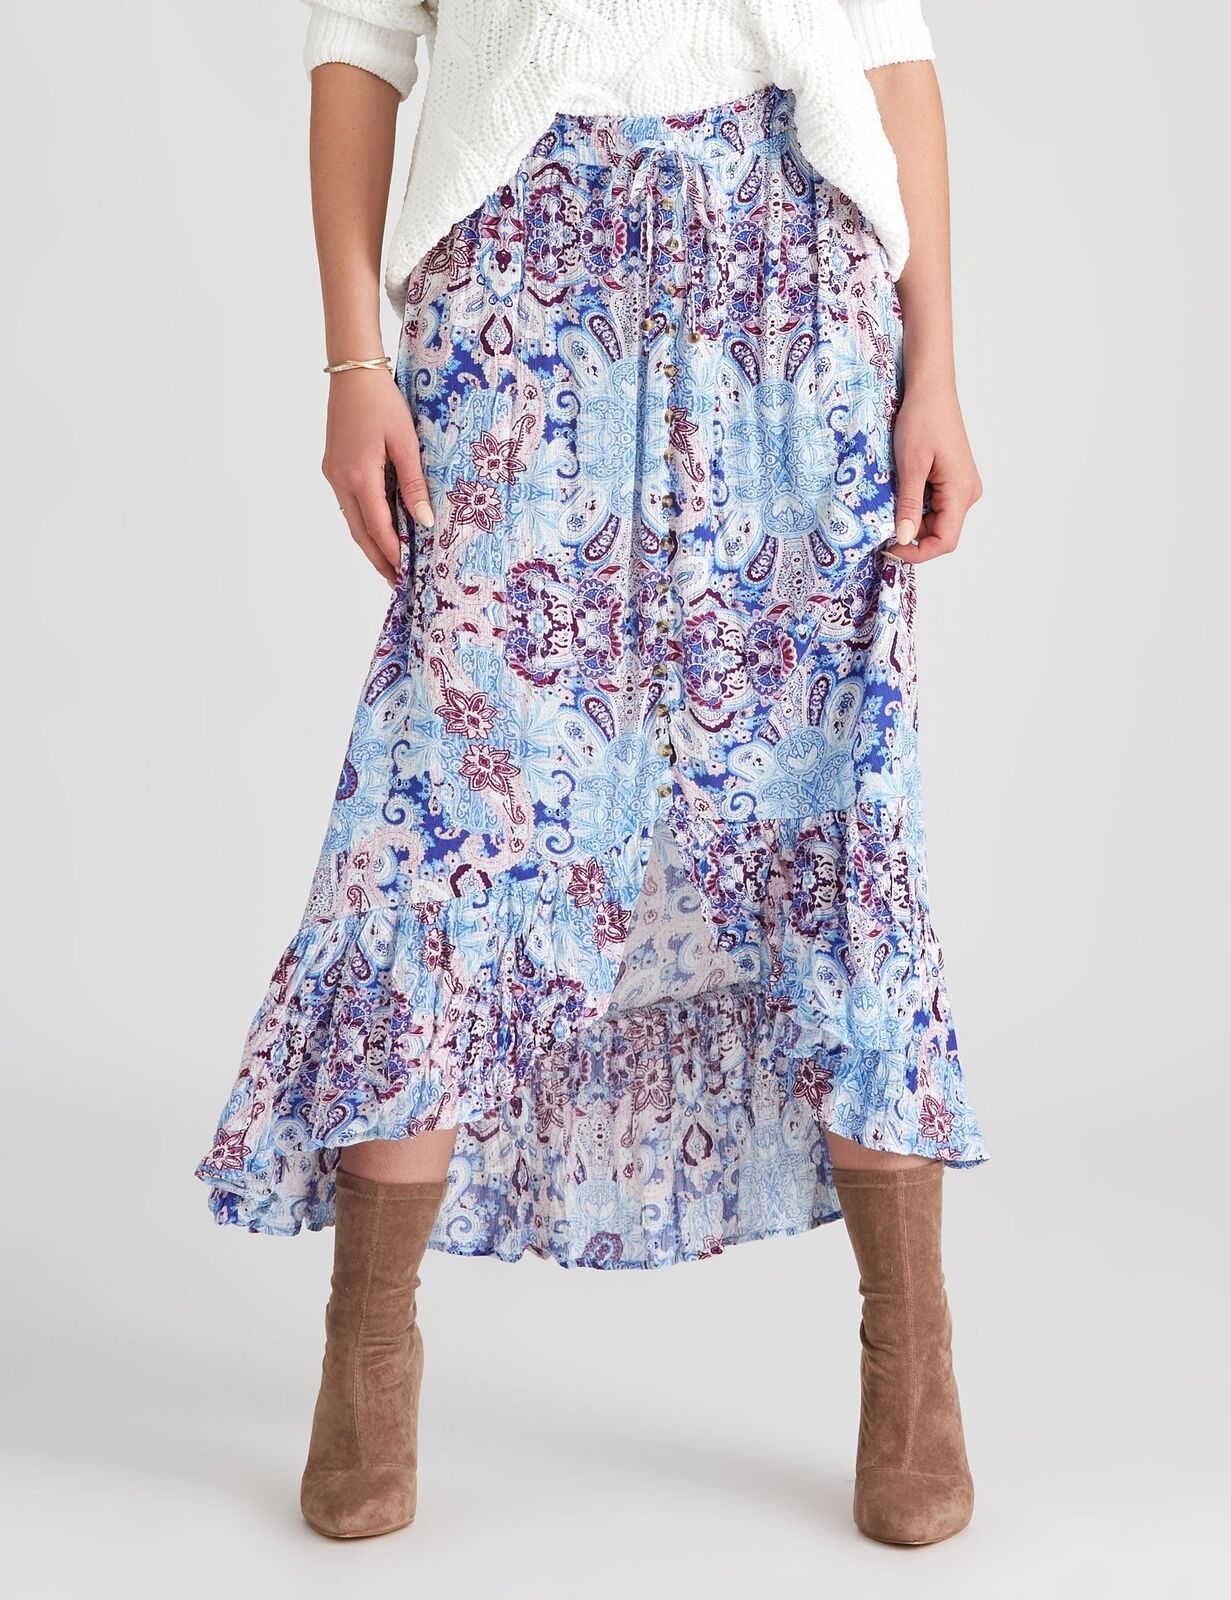 ROCKMANS - Womens Skirts - Maxi - Summer - Blue - Paisley - Smart Casual Fashion